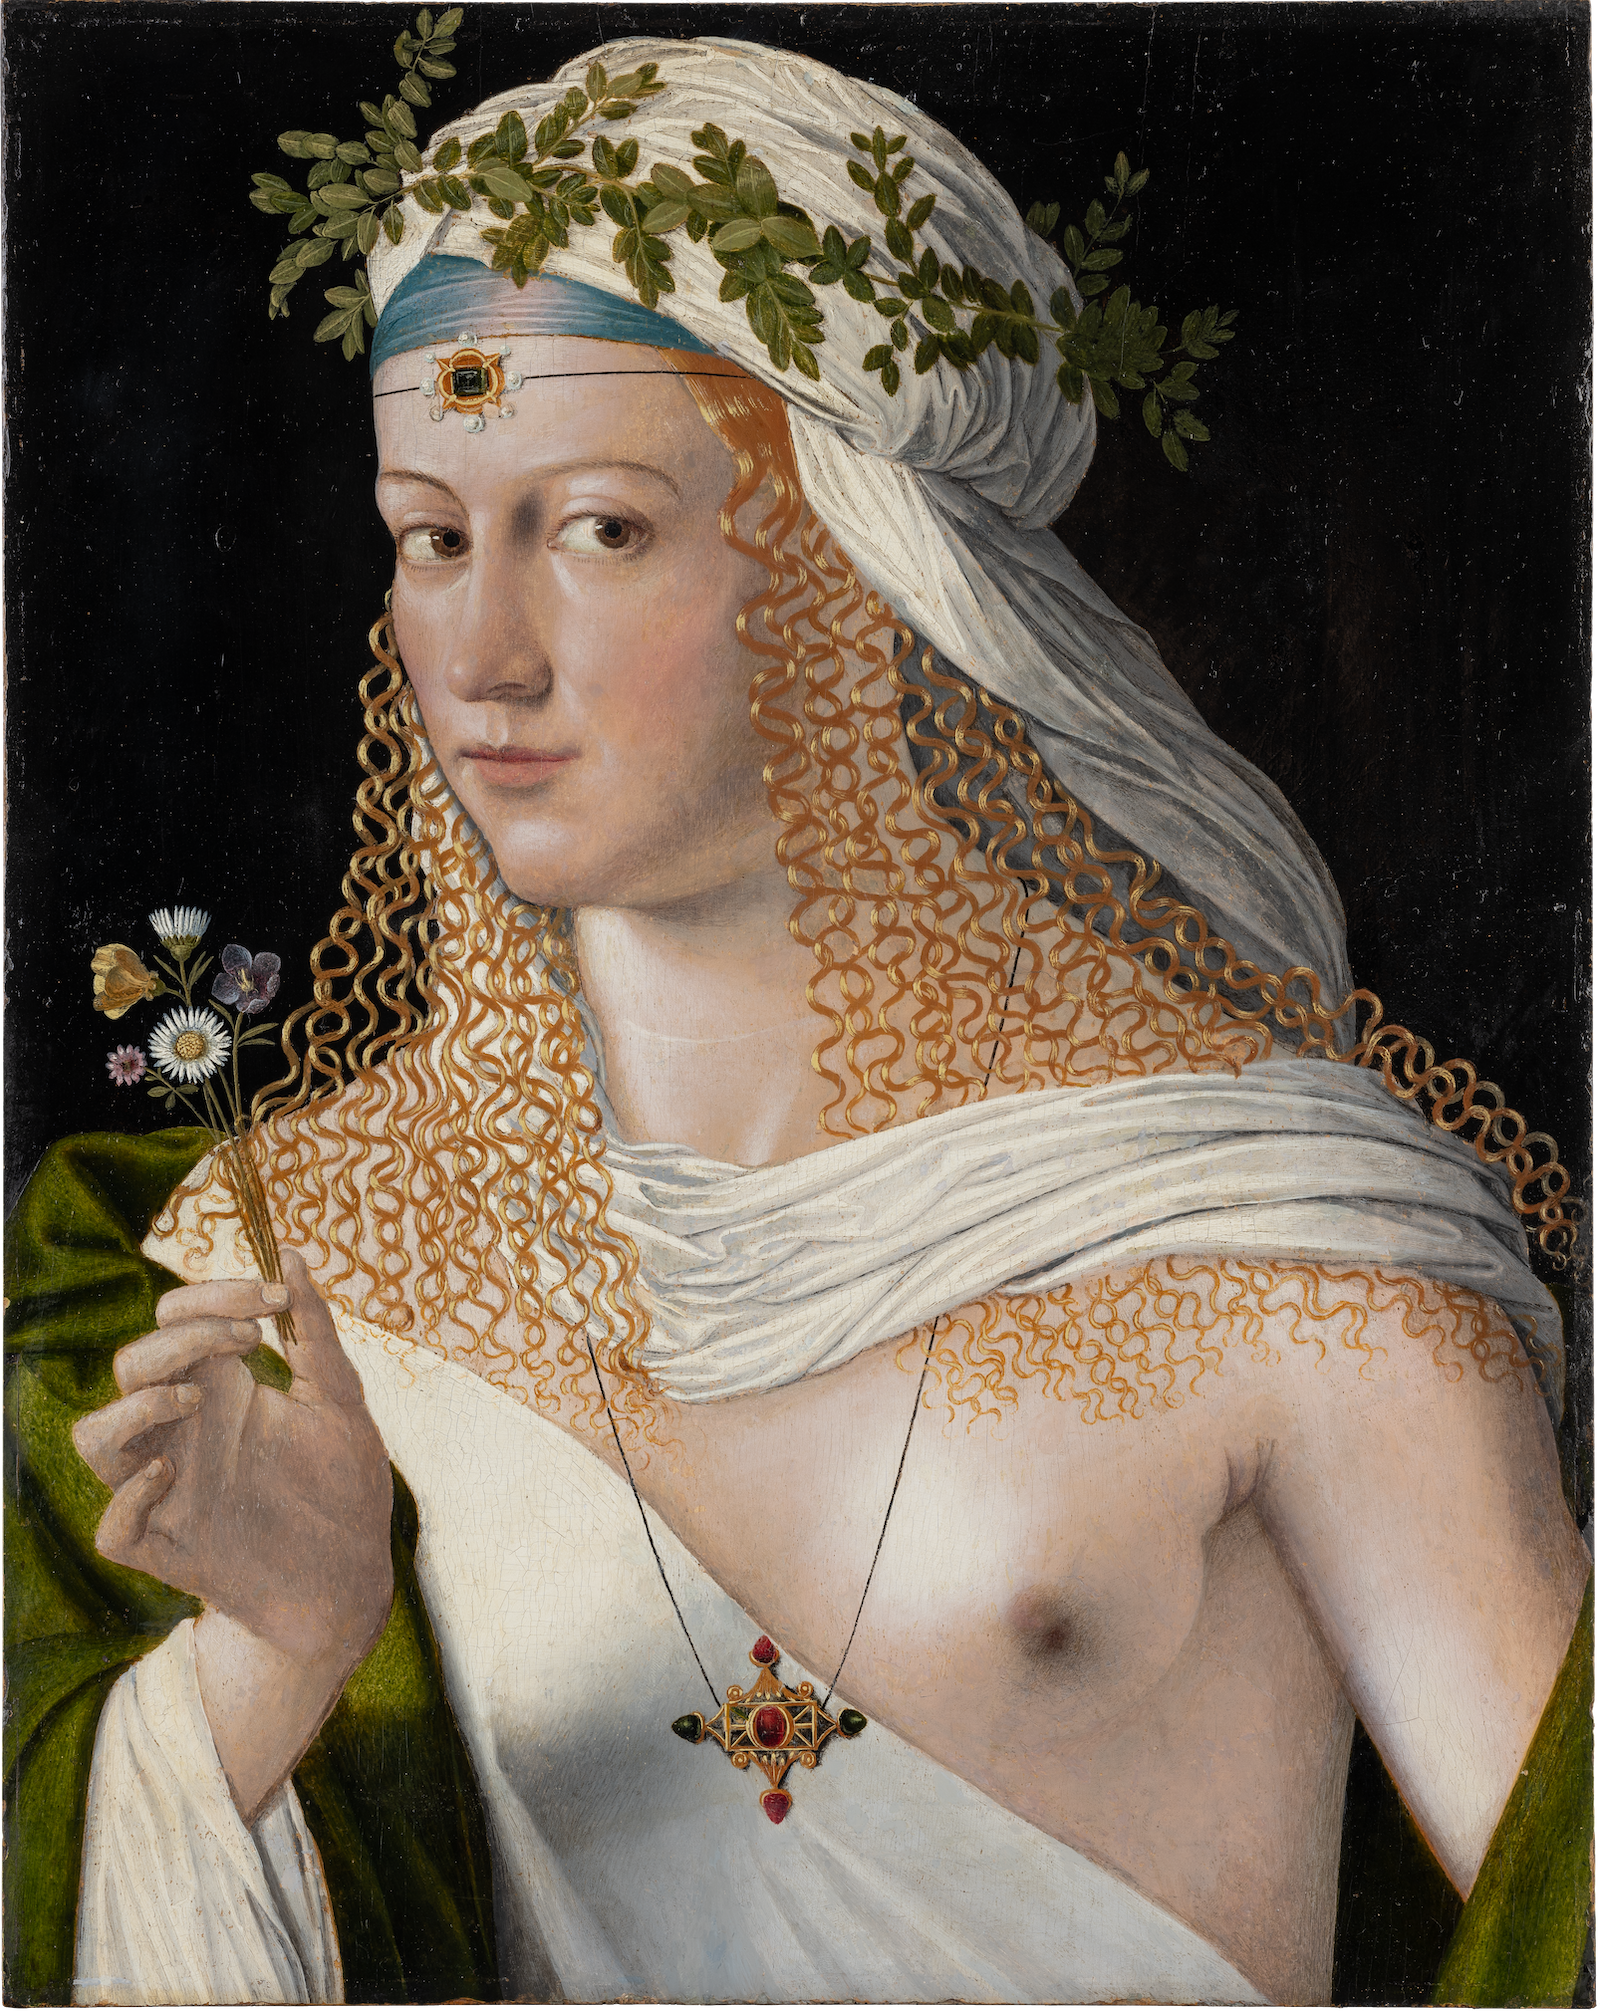 ‘Portrait of a Woman’ by Bartolomeo Veneto, traditionally assumed to be Lucrezia Borgia, c. 1520. Städel Museum. Public Domain.